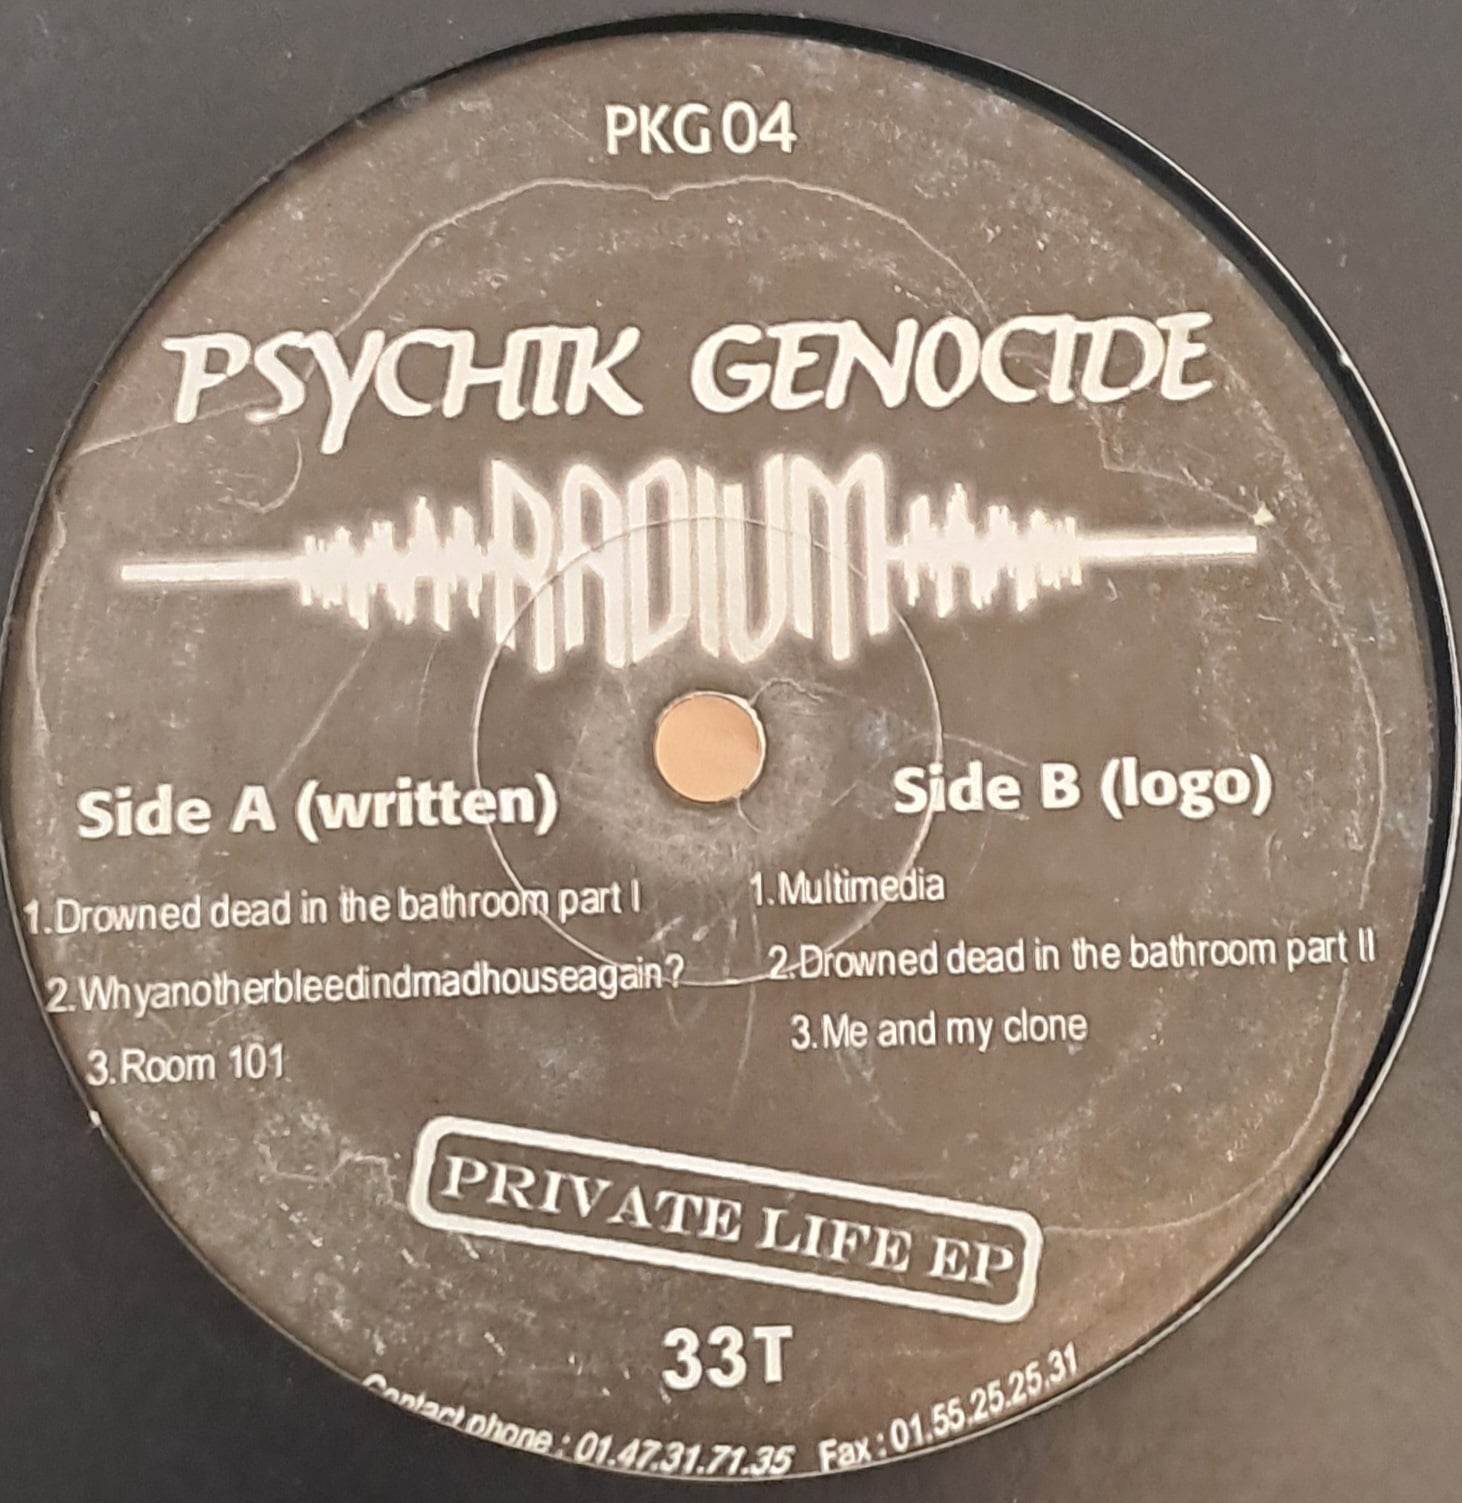 1) Psychik Genocide 04 - vinyle hardcore